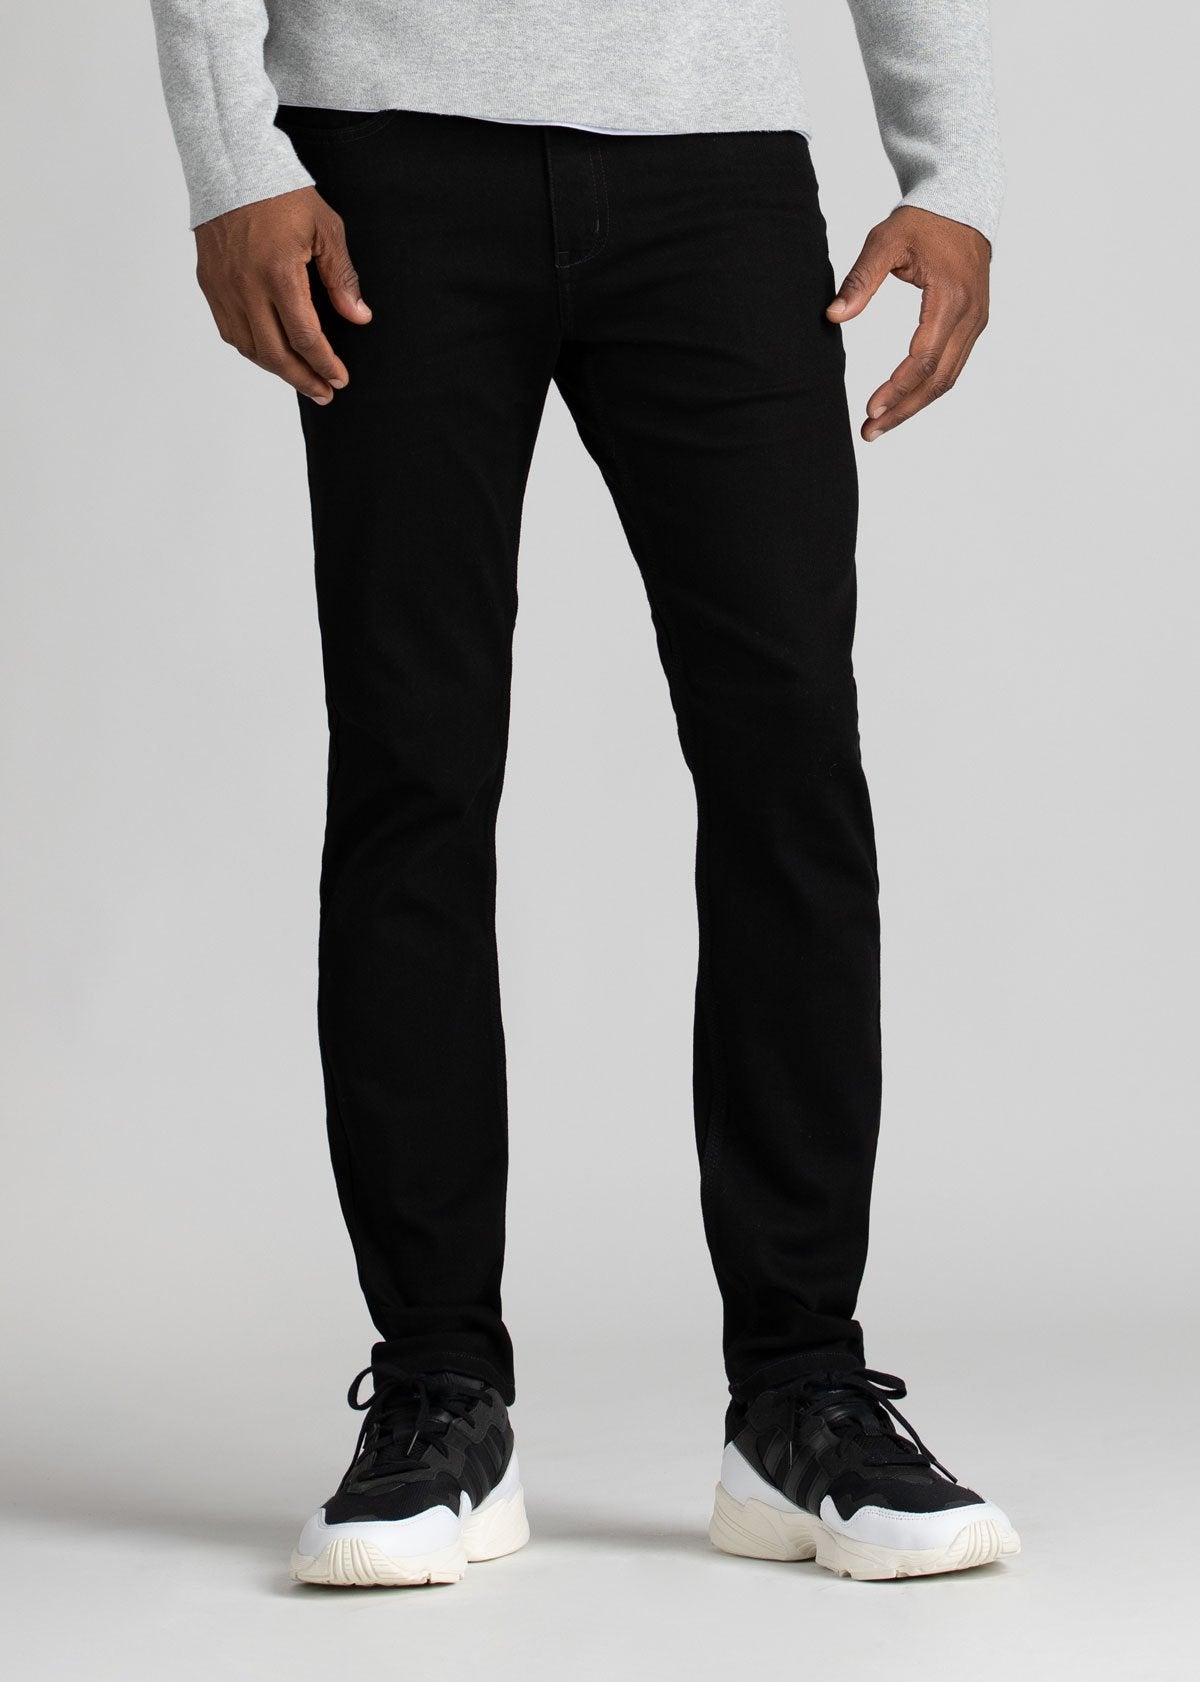 black water resistant slim jeans front view